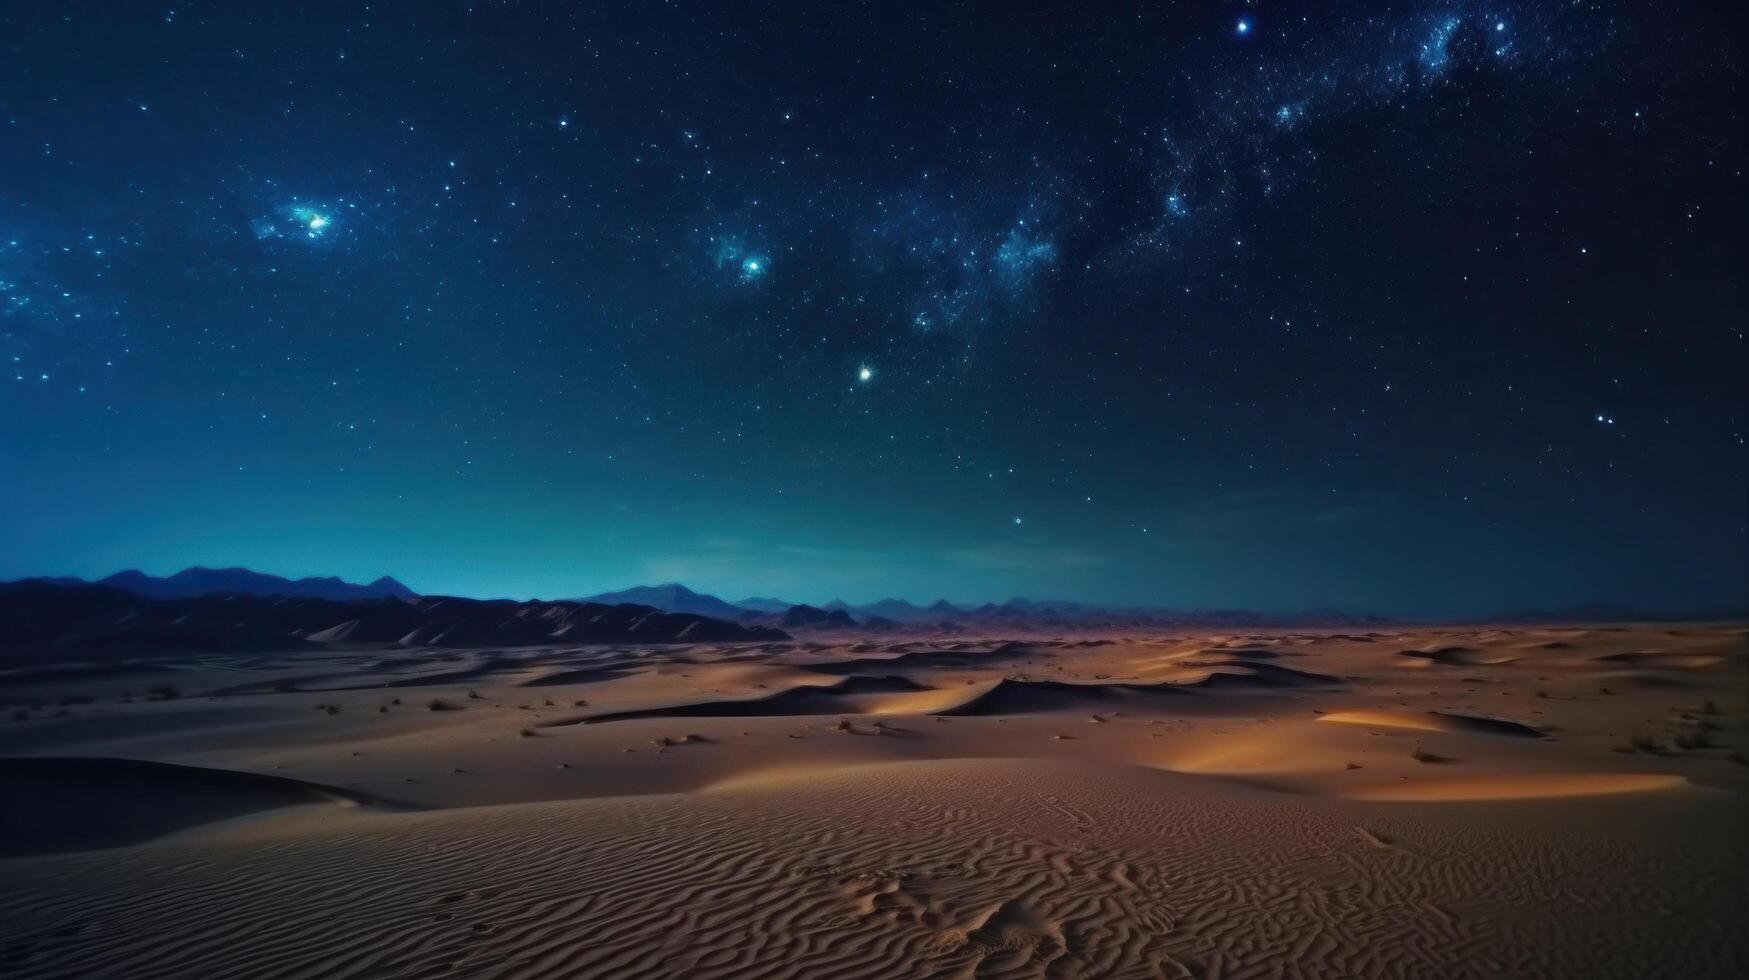 Desert and starry night. Illustration photo